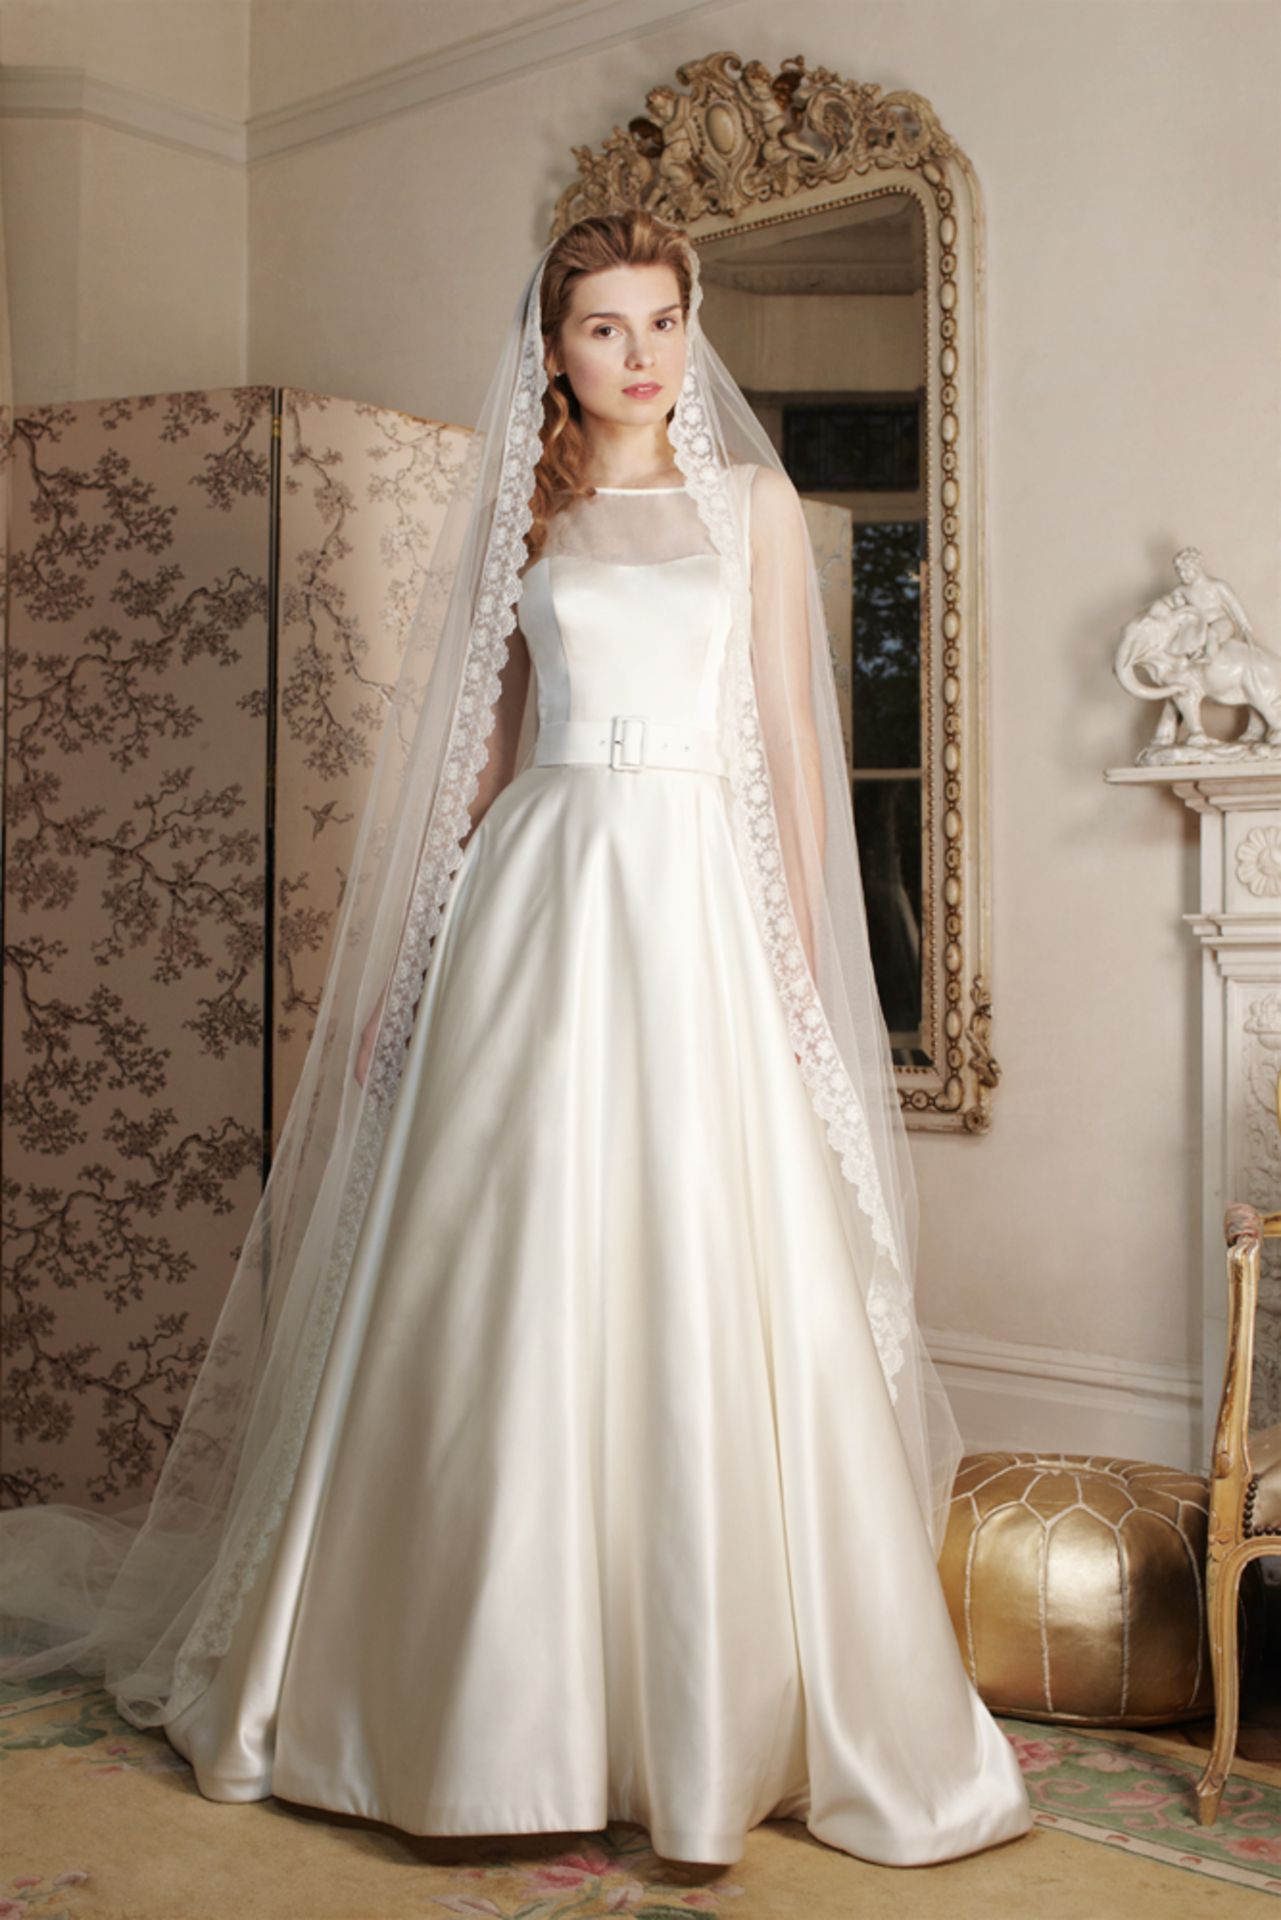 1 x MIA-MIA 'Tamara' Designer Wedding Dress Bridal Gown, With Illusion Neckline, Boned Corset And